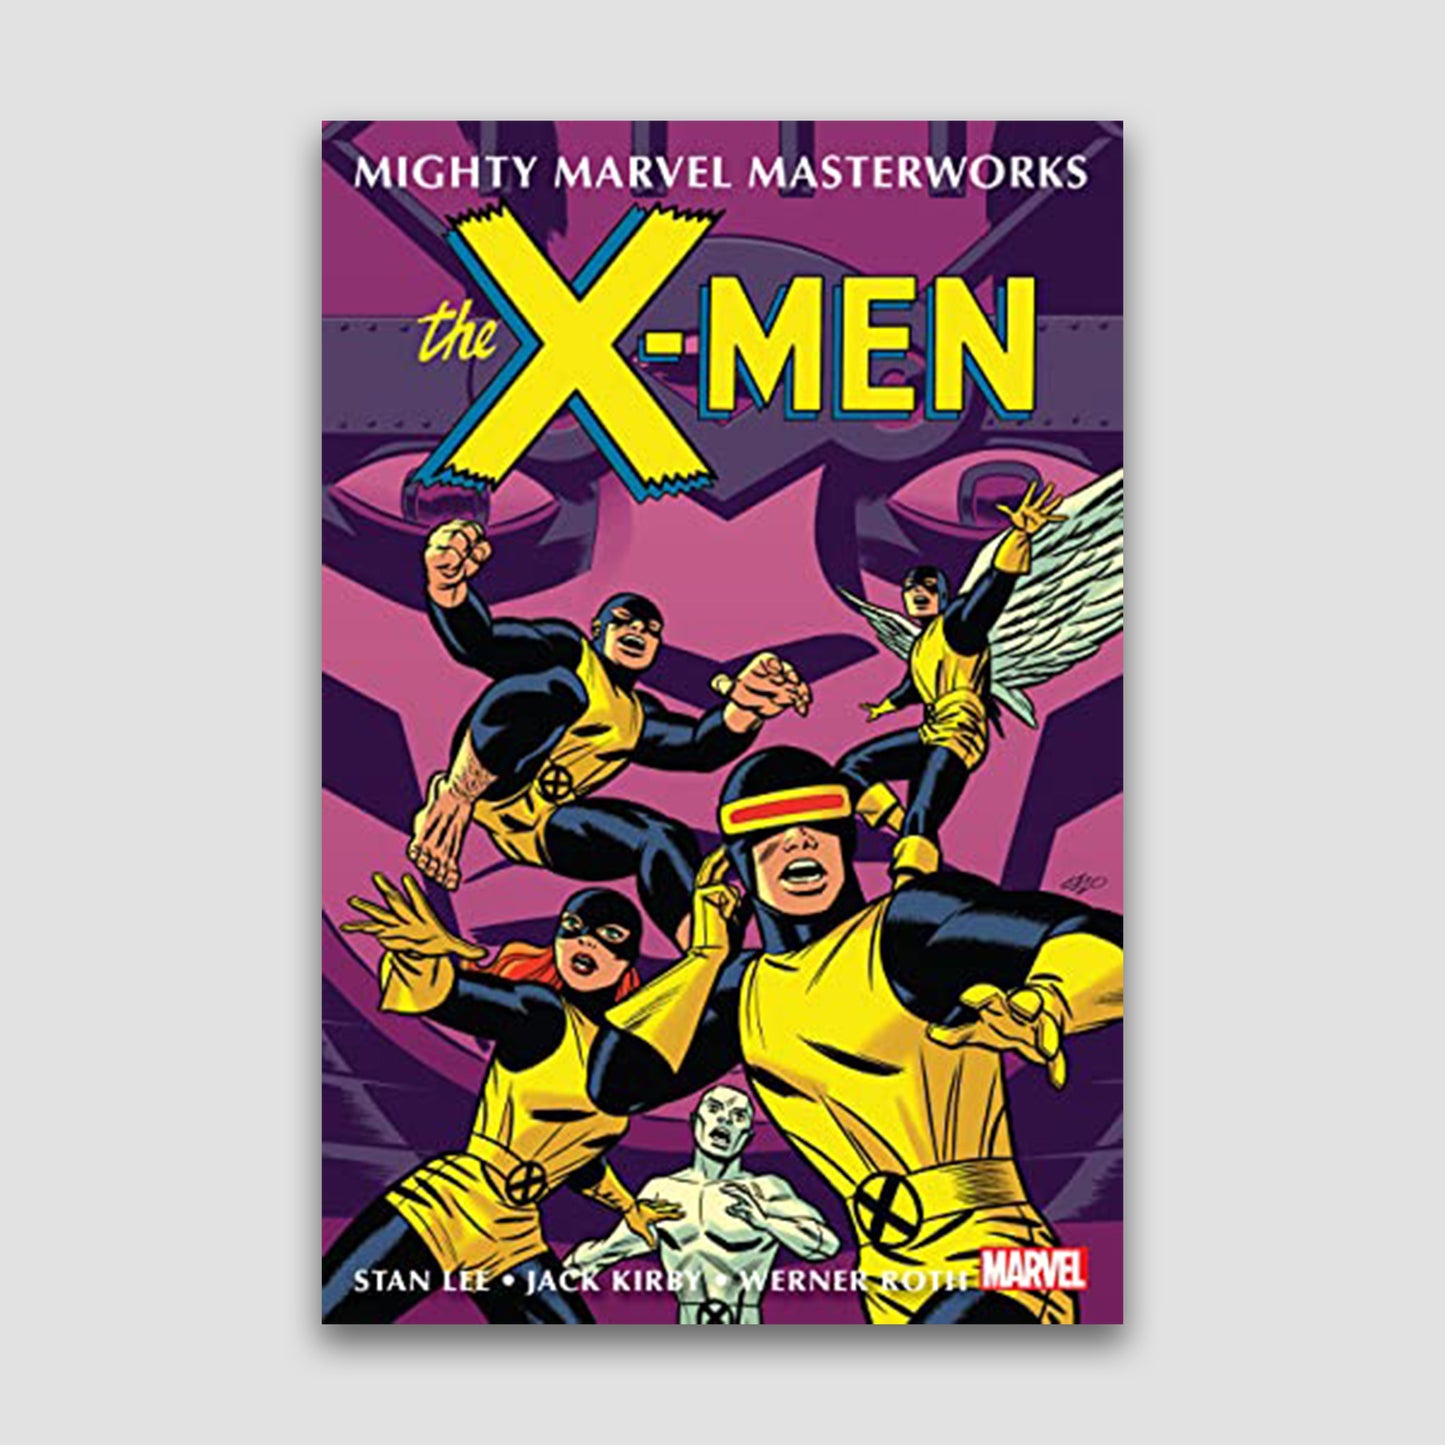 Mighty Marvel Masterworks: The X-Men - Where Walks the Juggernaut Vol. 2